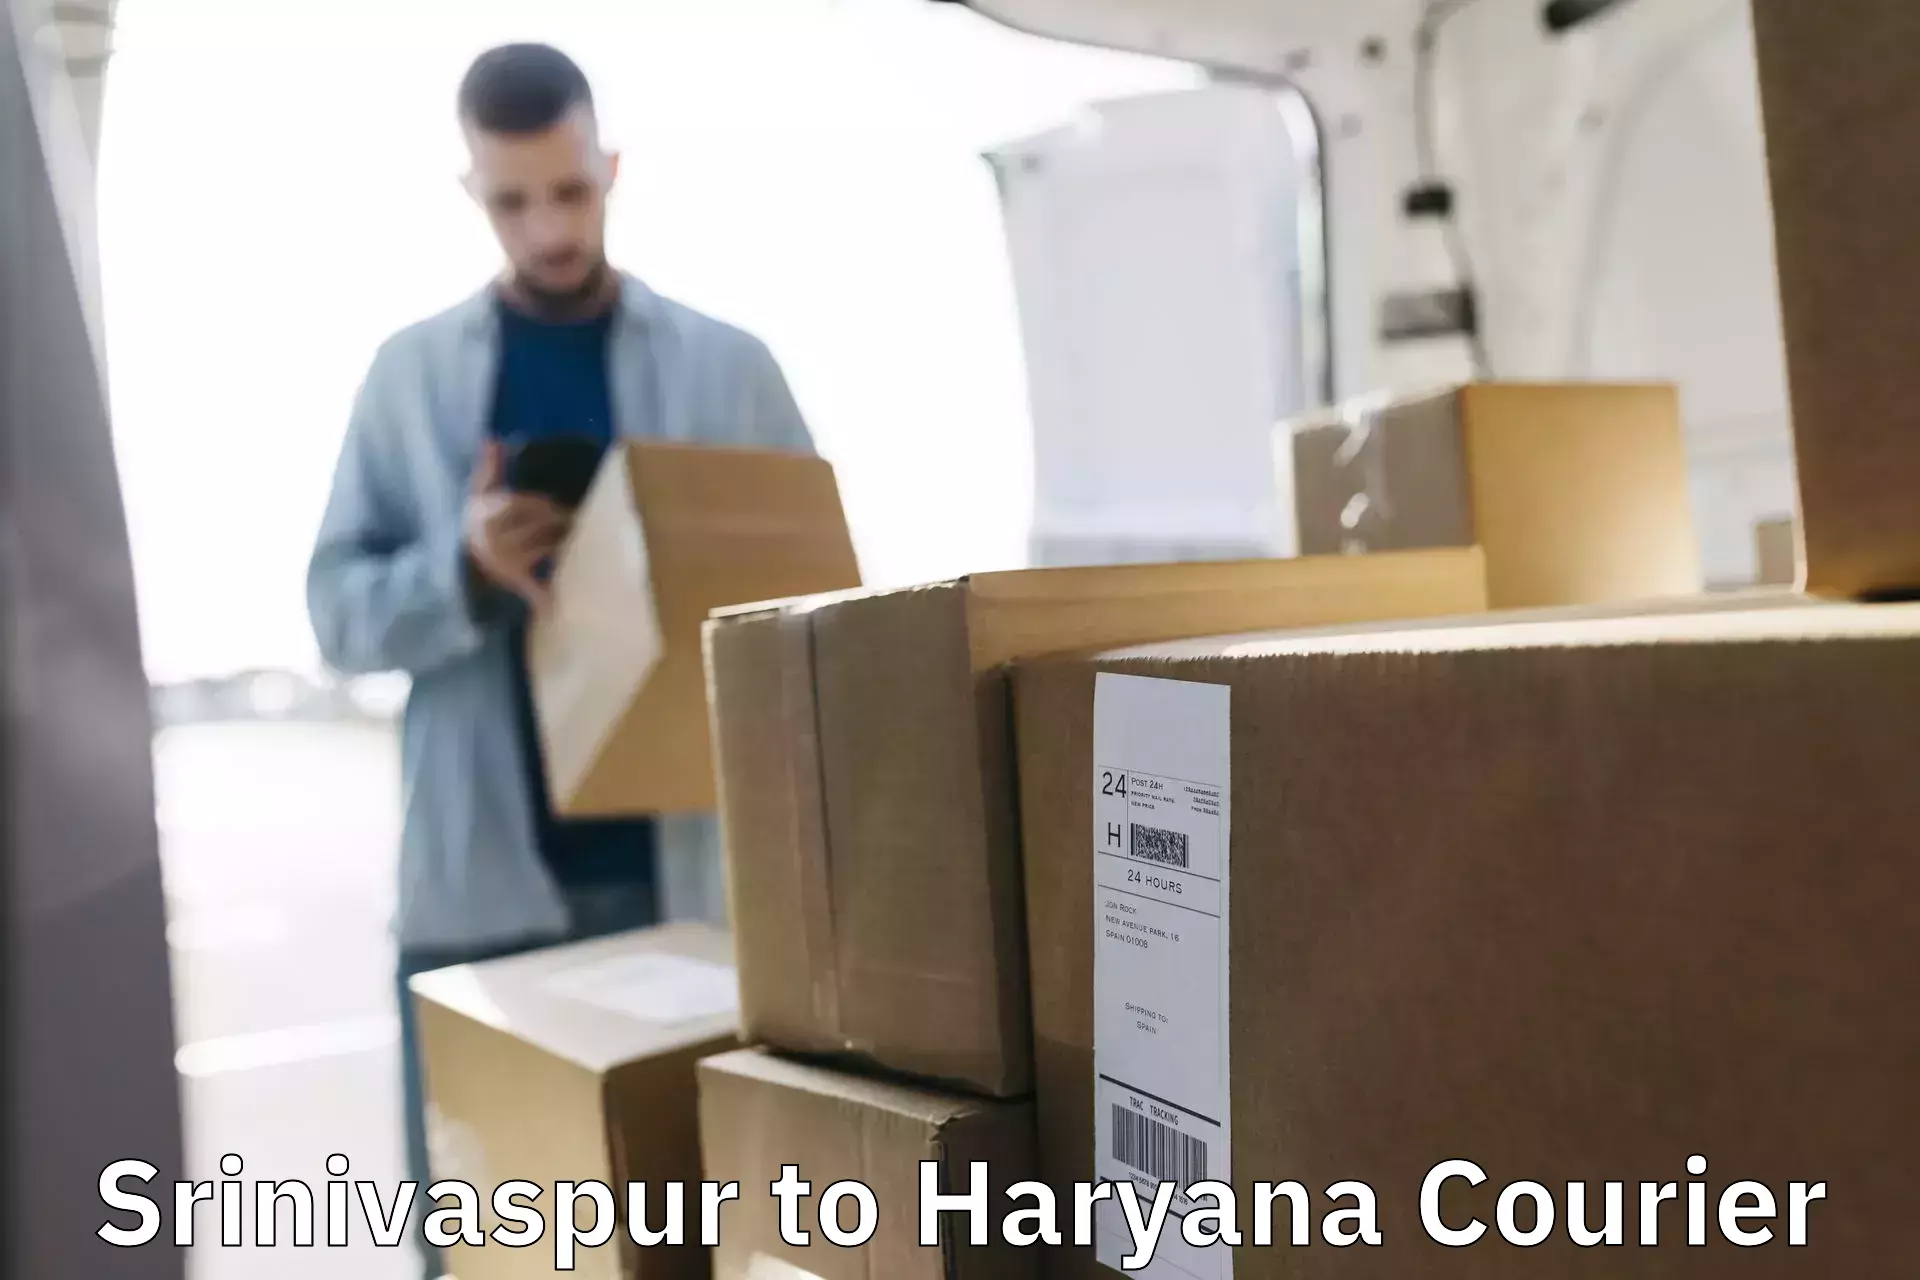 Courier service innovation Srinivaspur to Charkhari